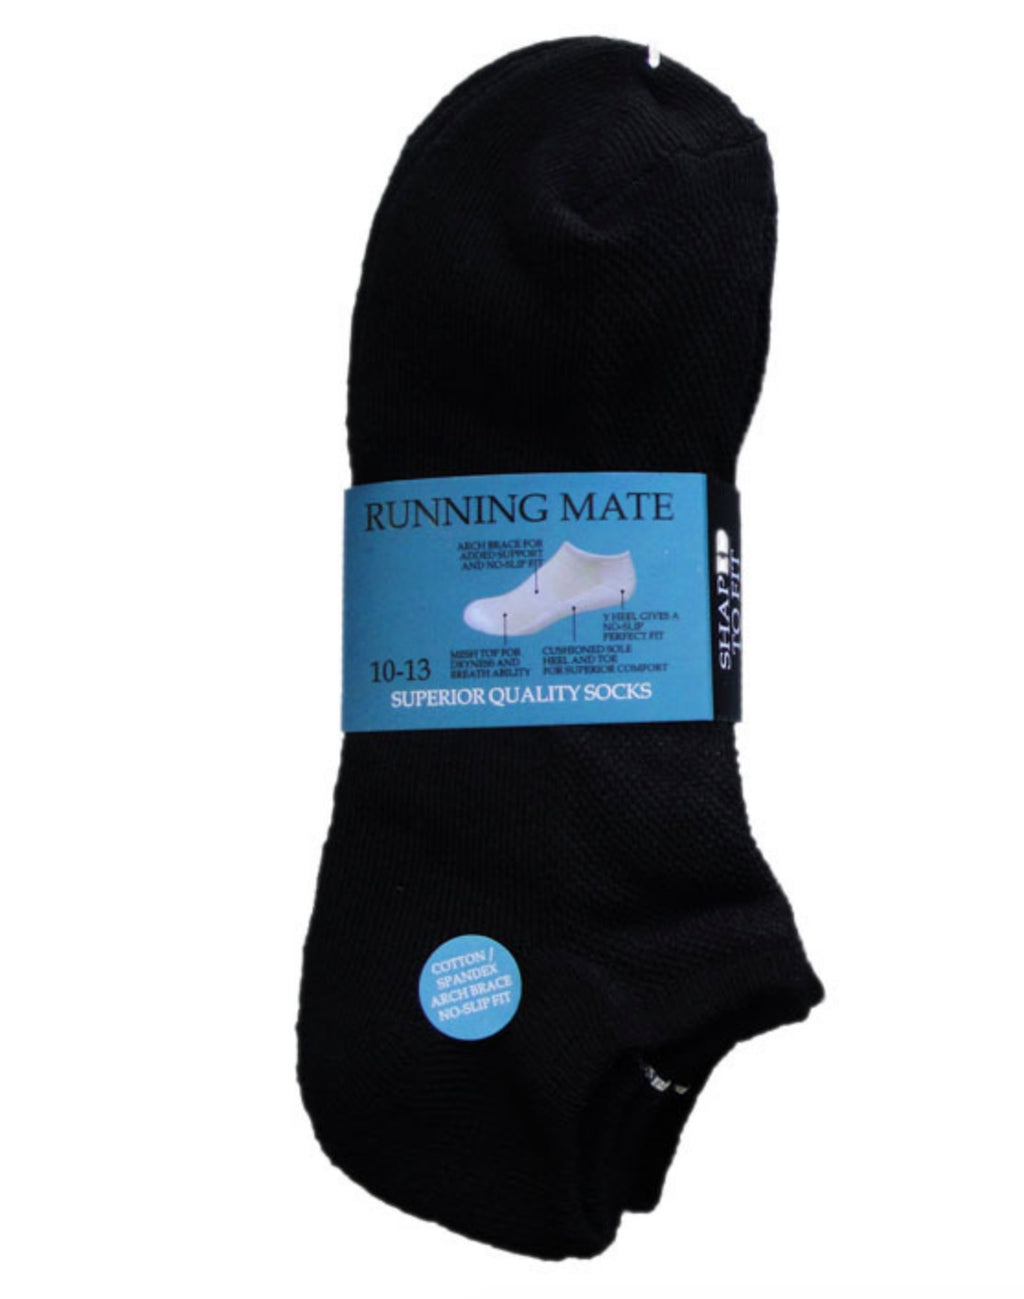 Running Mate Men's Athletic Low-Cut Socks - Sock Size 10-13 - Multi Pair Packages - (Black, 3 Pair)